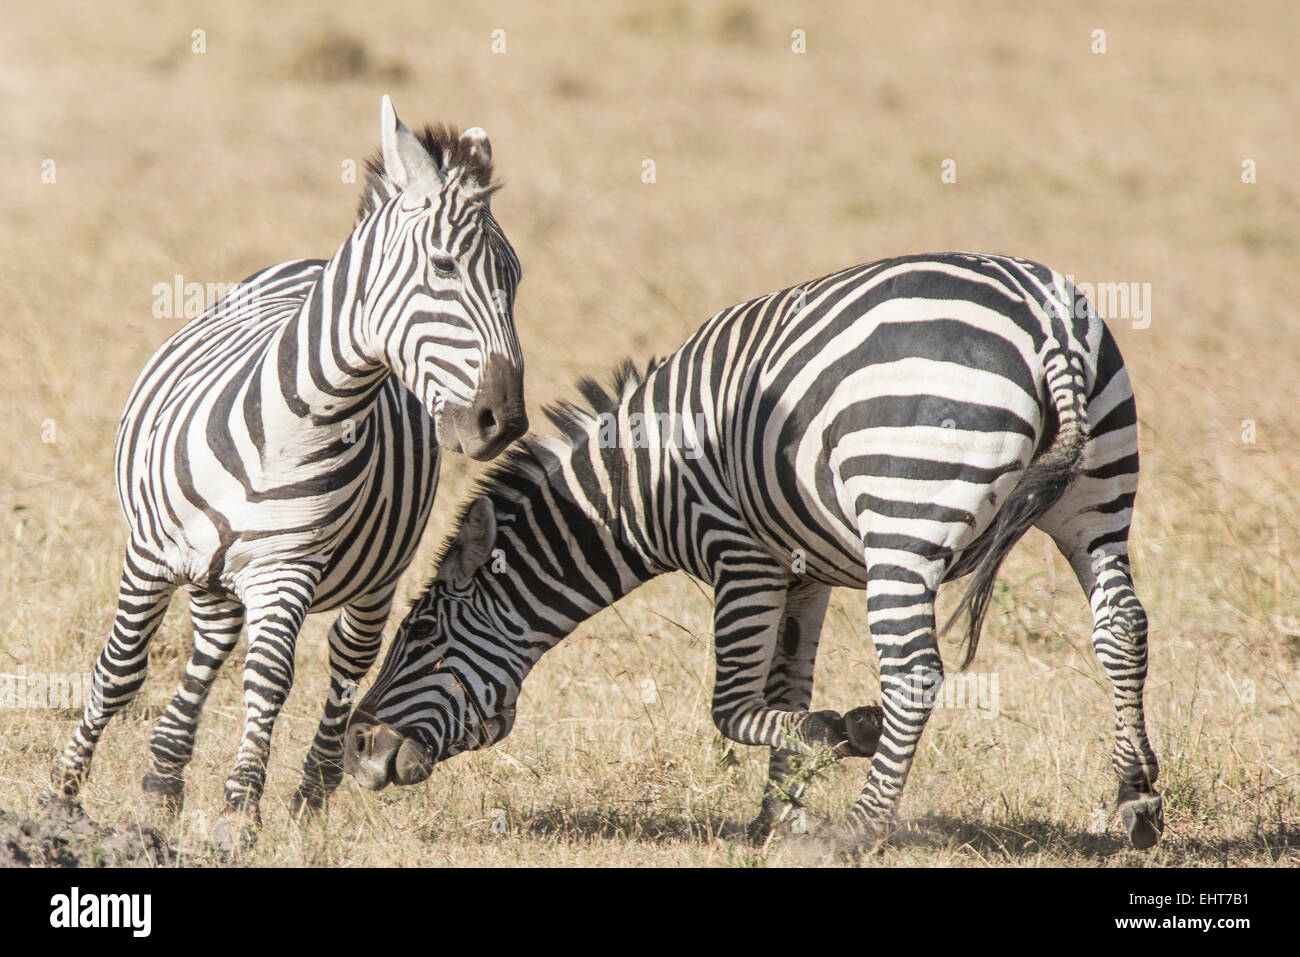 Zebra,Equus quagga,Stepp   Fotodienst Schreyer 0049 172 162 5407 www.sportfoto-schreyer.jimdo.com Afrika,Kenia, Massai Mara 2015 Stock Photo